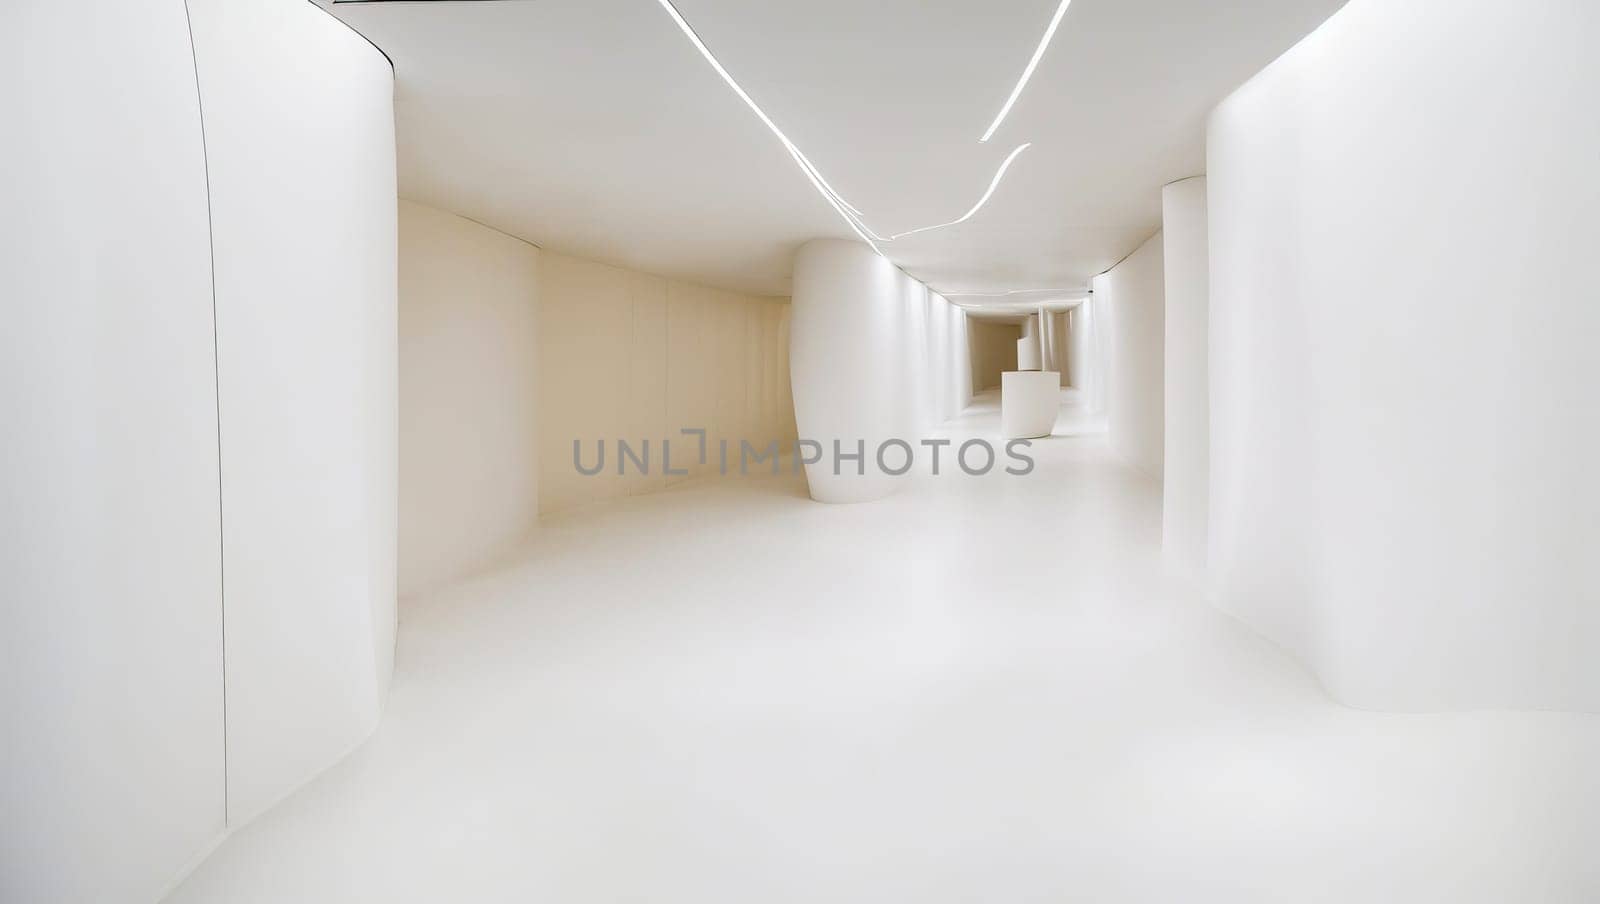 Inside a long tunnel of light by applesstock